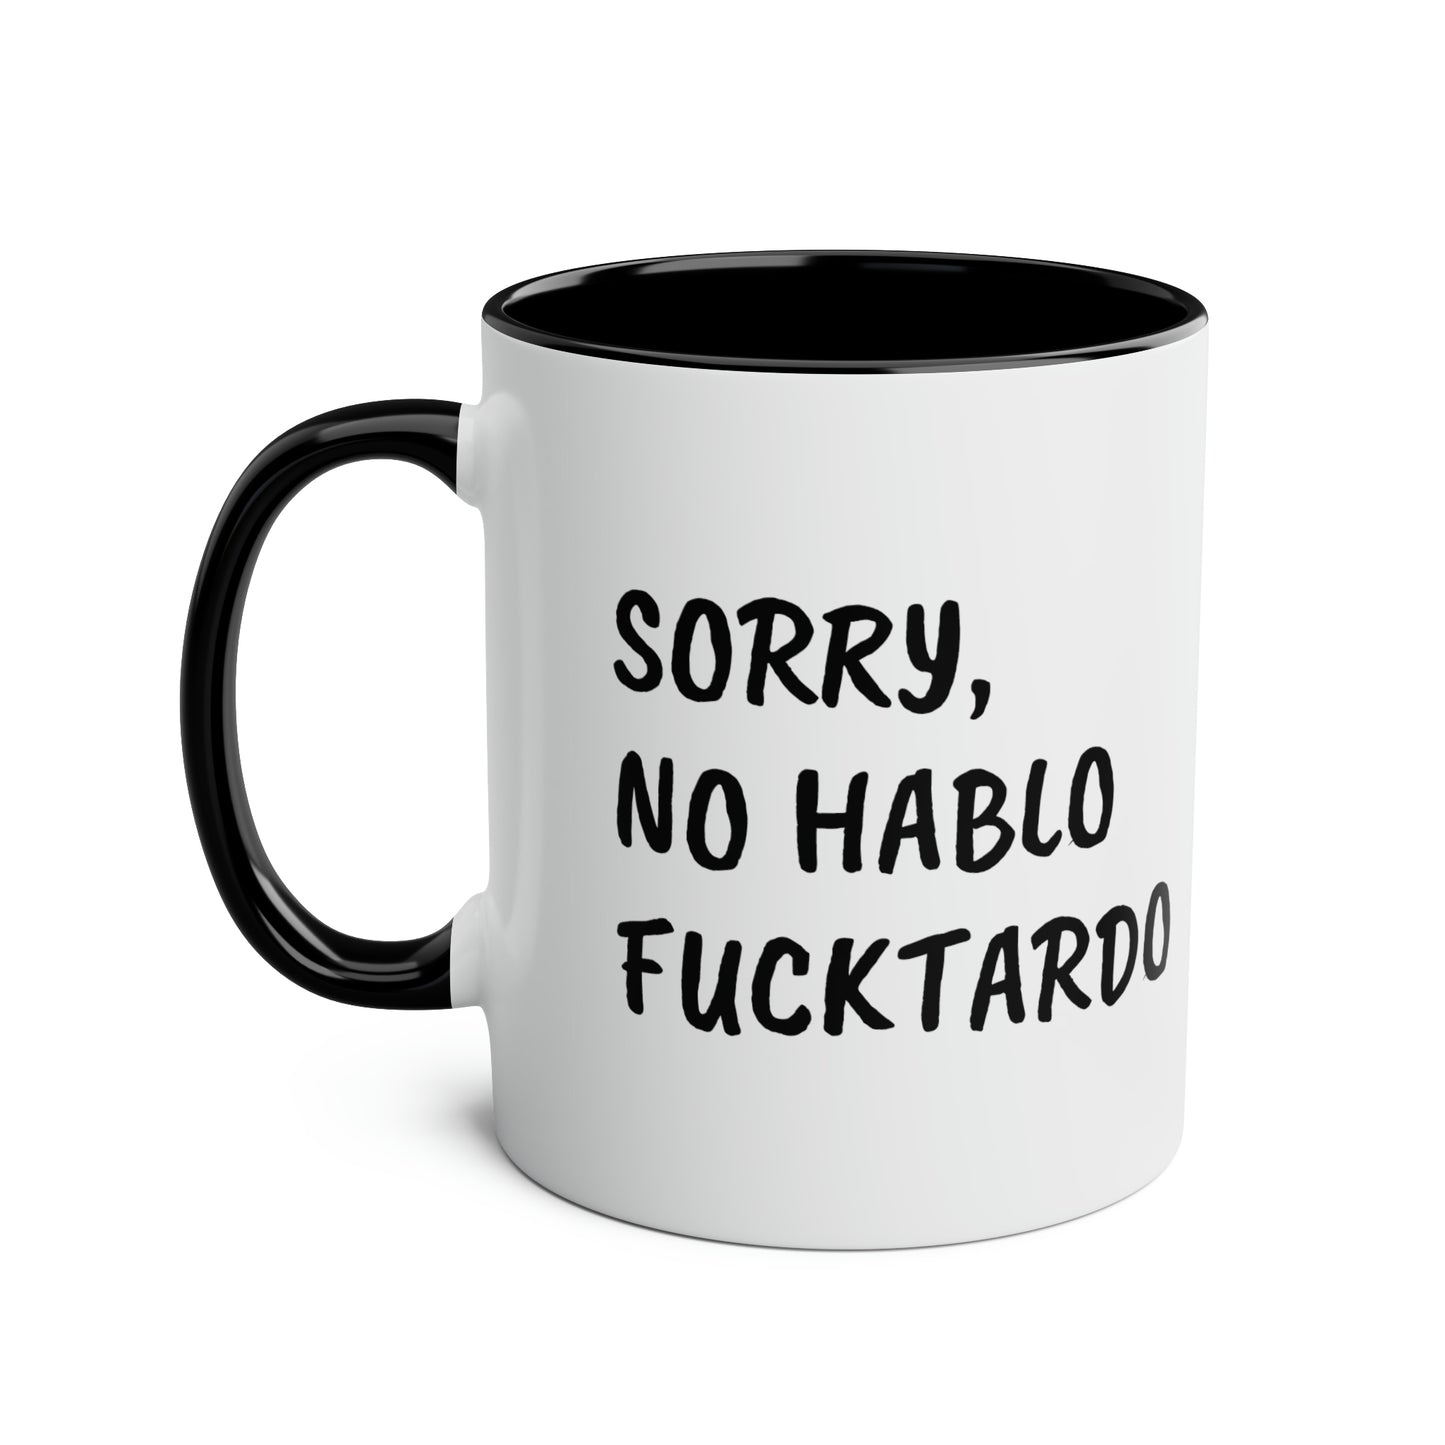 Sorry, No Hablo Fucktardo Funny Mug